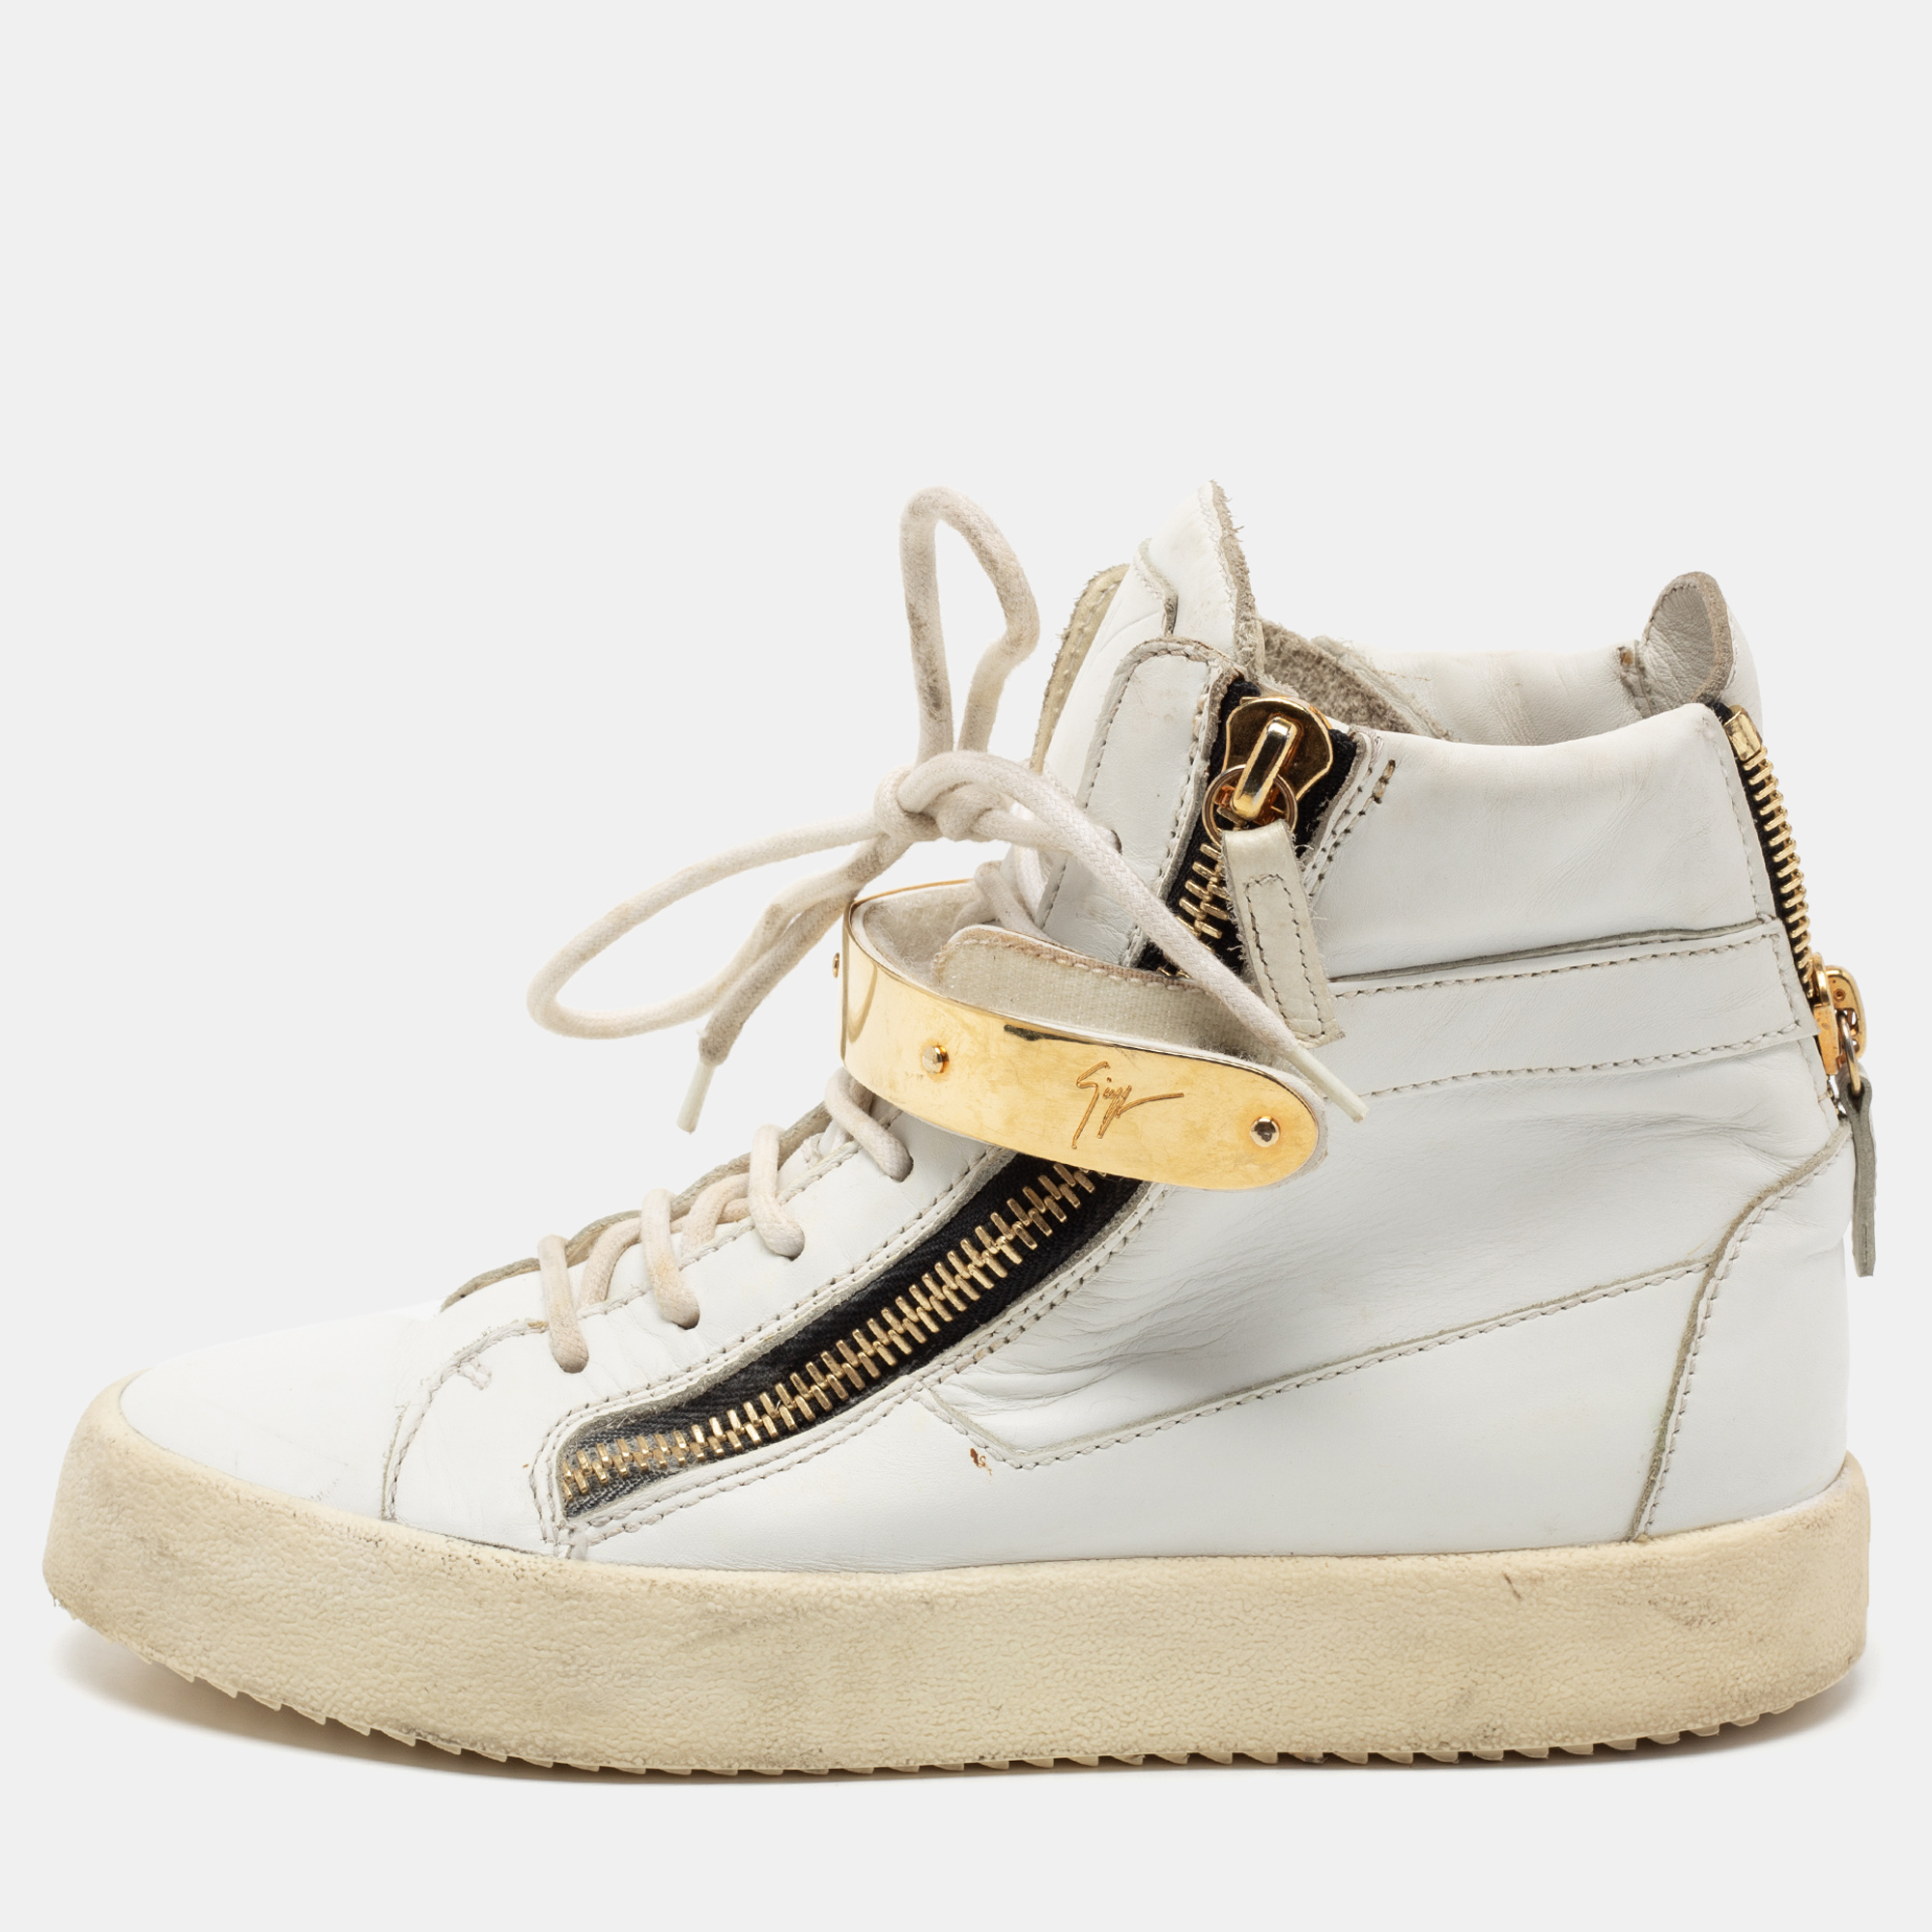 Giuseppe zanotti white leather double zipper high top sneakers size 38